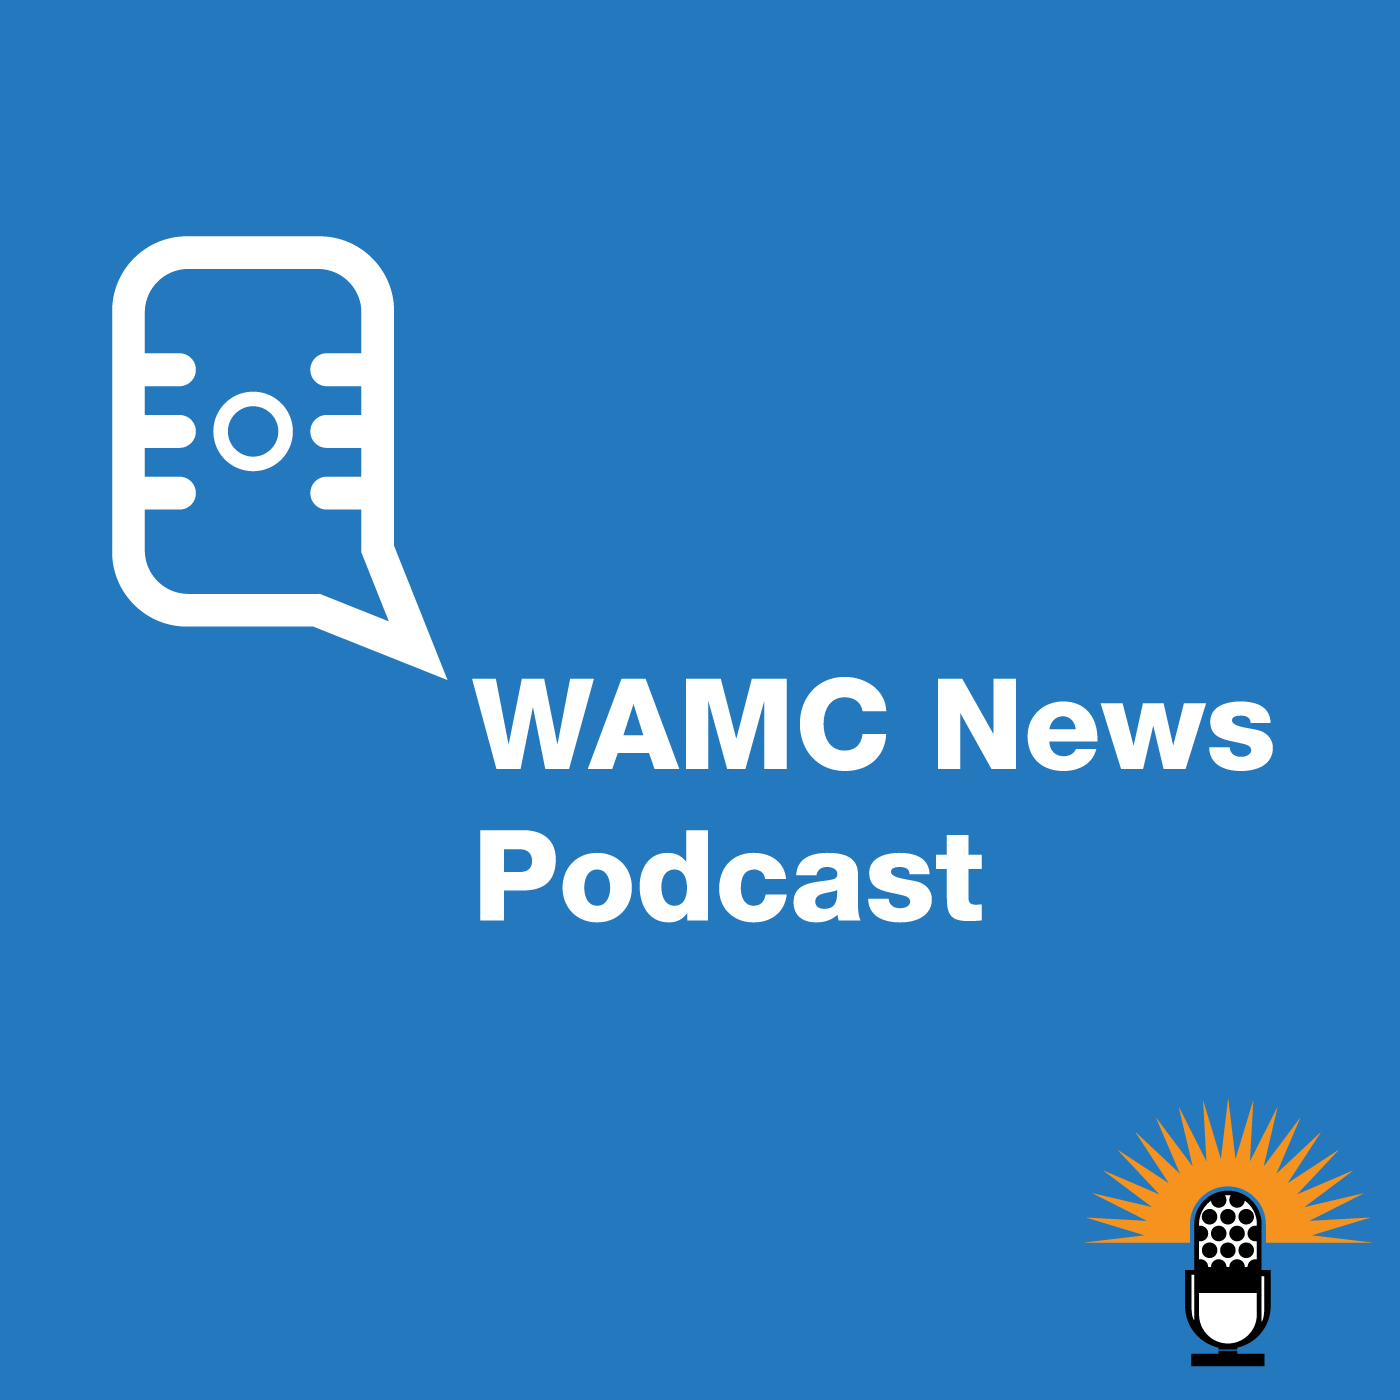 WAMC News Podcast - Episode 198